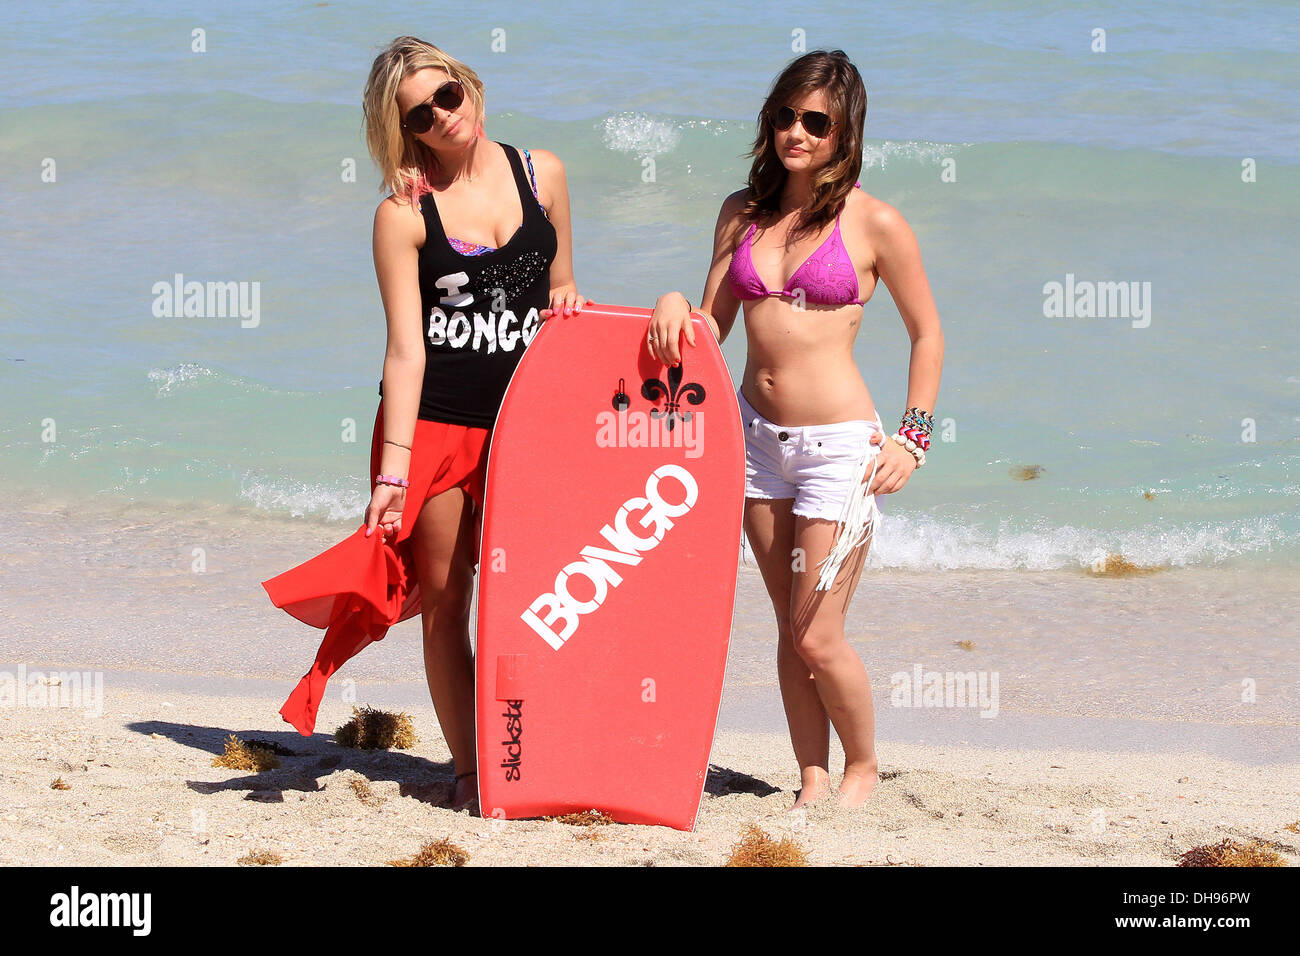 Lucy Hale and Ashley Benson stars of ABC's hit show "Pretty Little Liars"  and Bongo spokeswomen hit Bongo Bikini Shack for a Stock Photo - Alamy